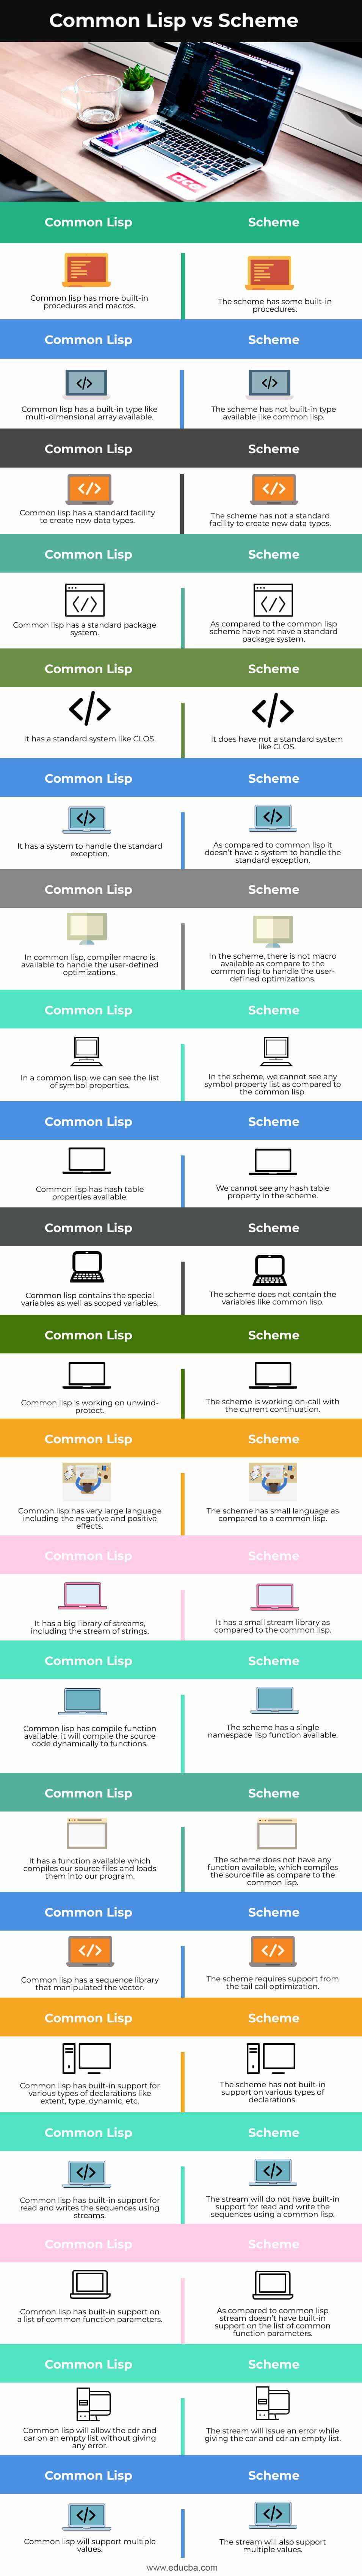 Common-Lisp-vs-Scheme-info